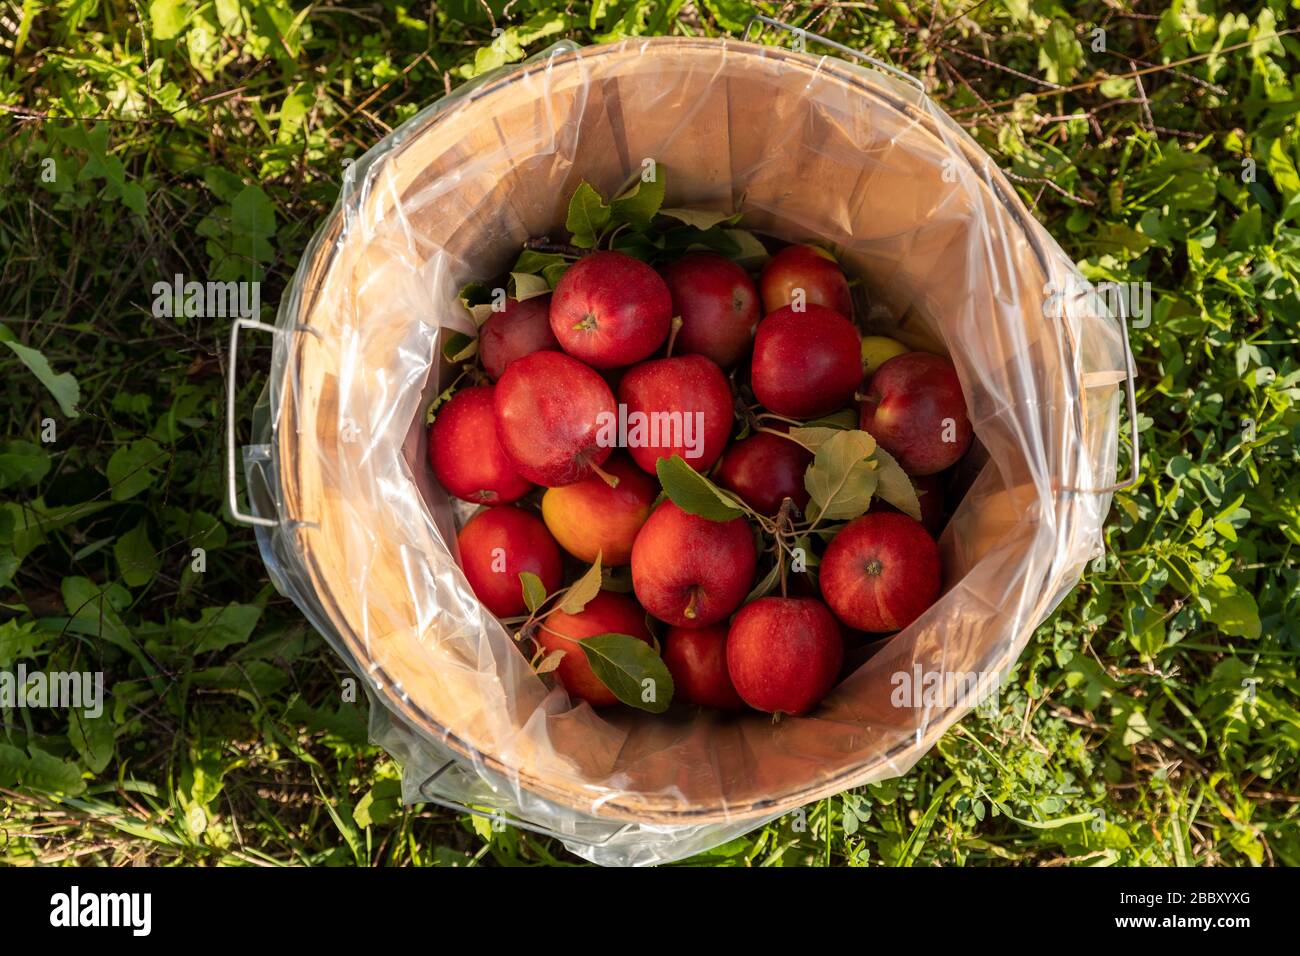 A bushel basket of freshly picked apples Stock Photo